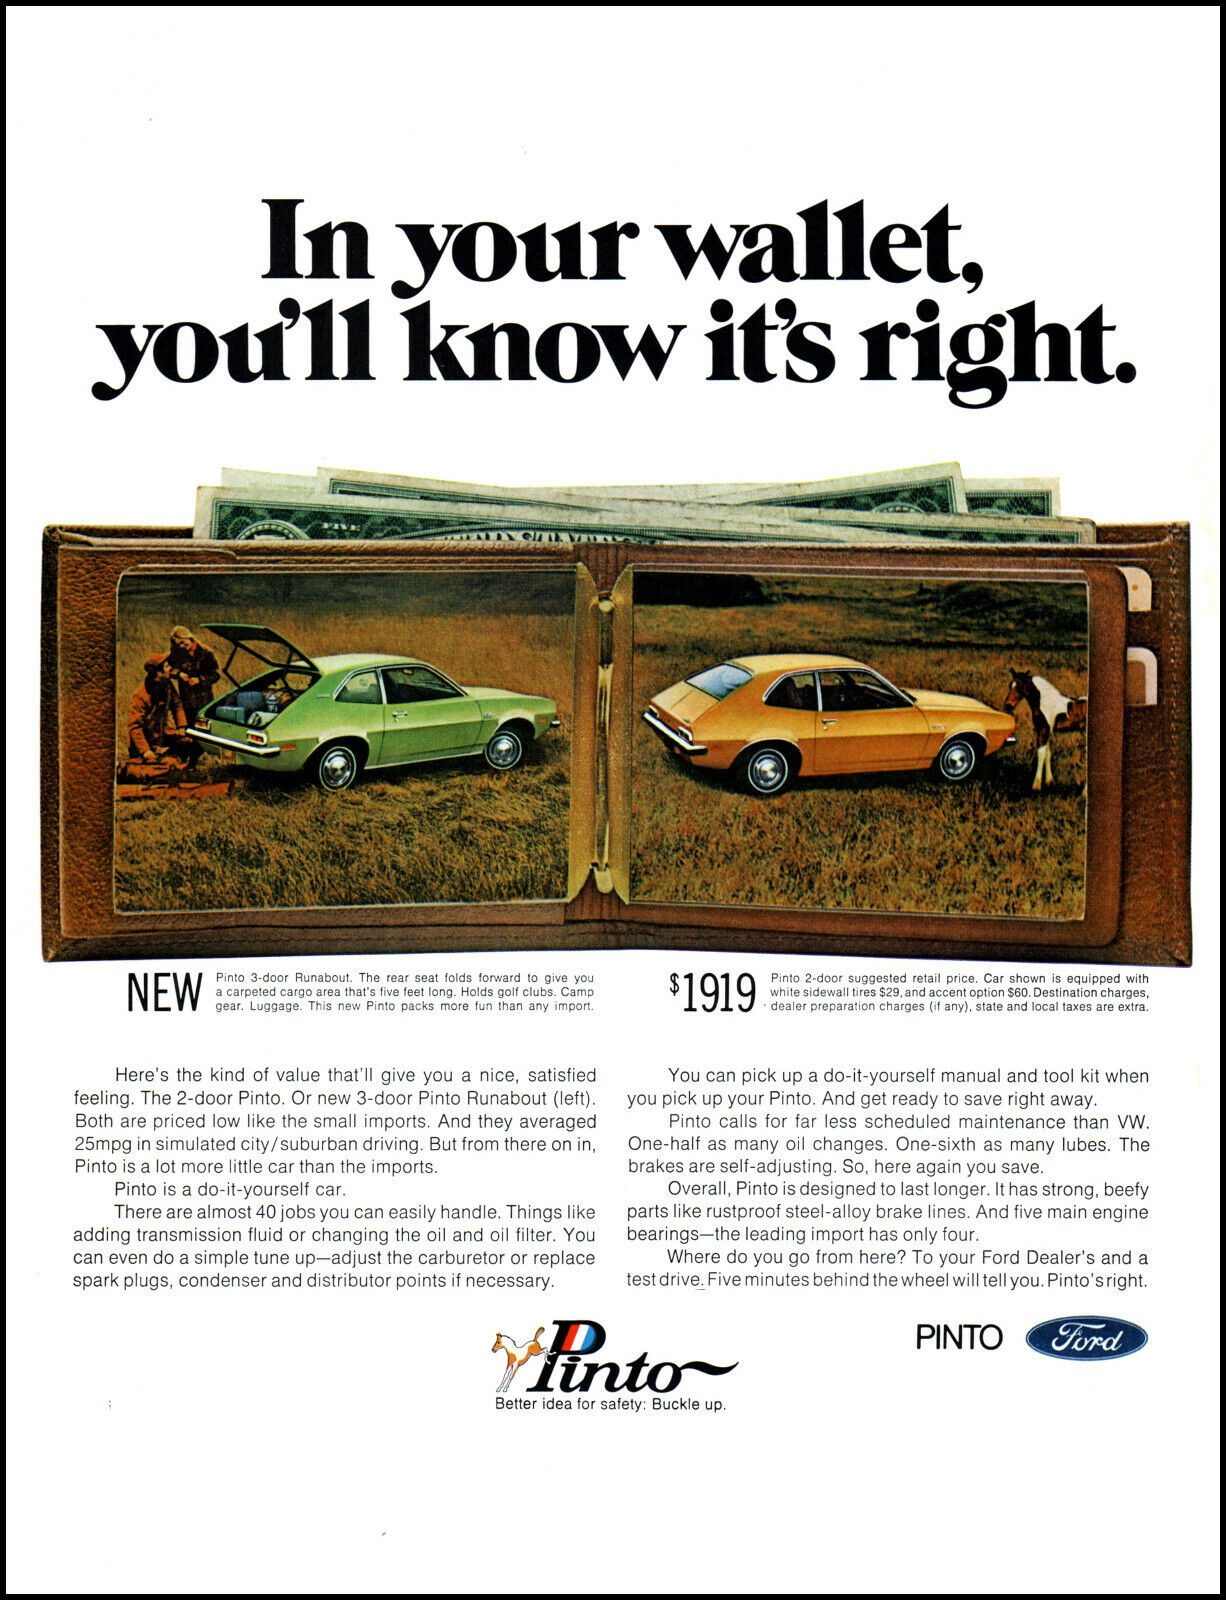 1971 Ford Pinto Car 2 Door + New 3 Door Runabout vintage photo print ad L21